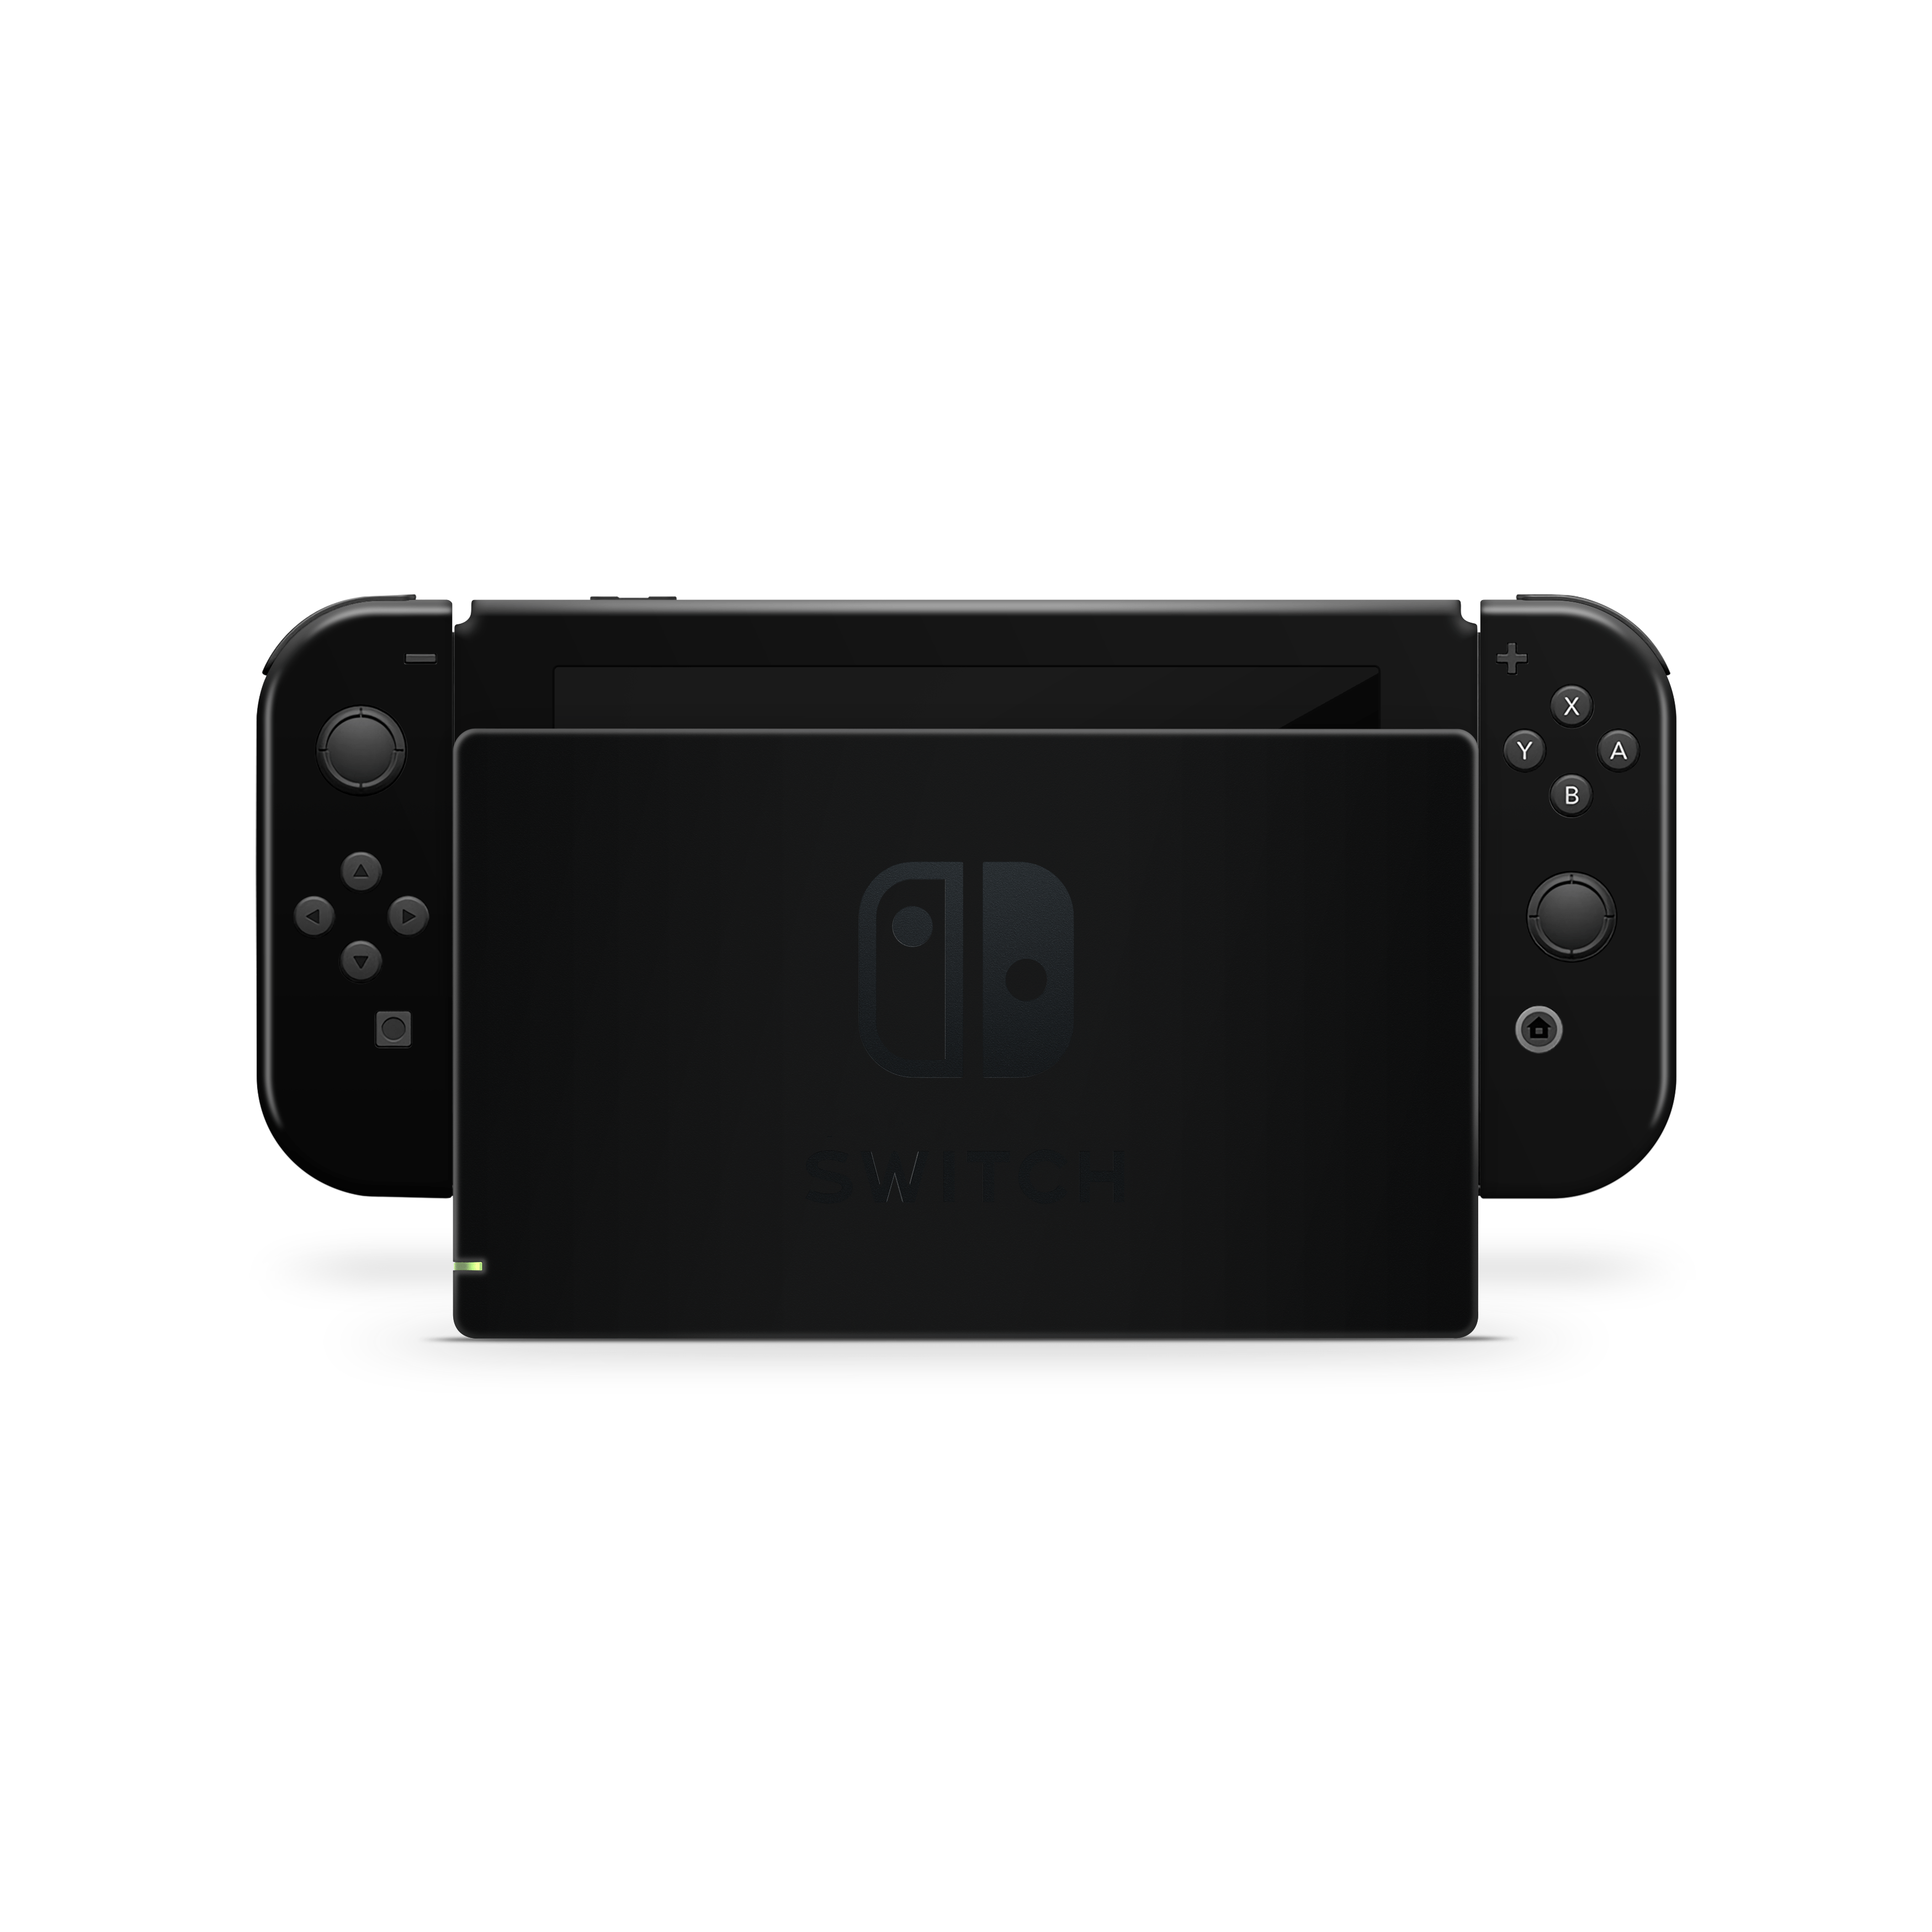 Blackout Nintendo Switch Skin